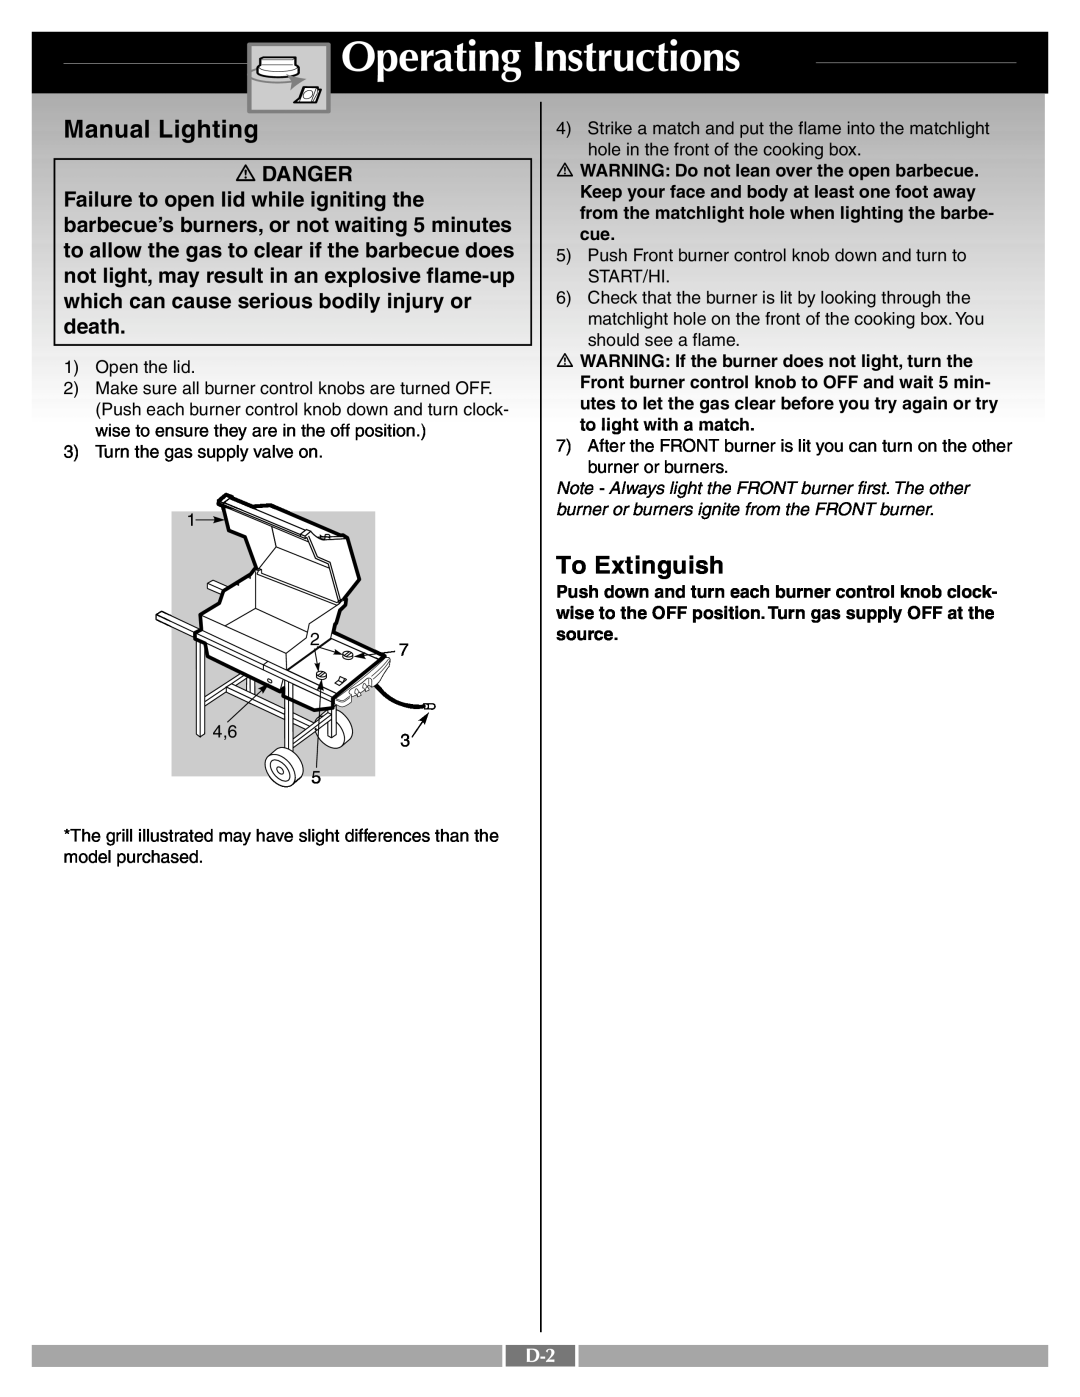 Weber 55548 manual Manual Lighting, Operating Instructions, To Extinguish, Danger 